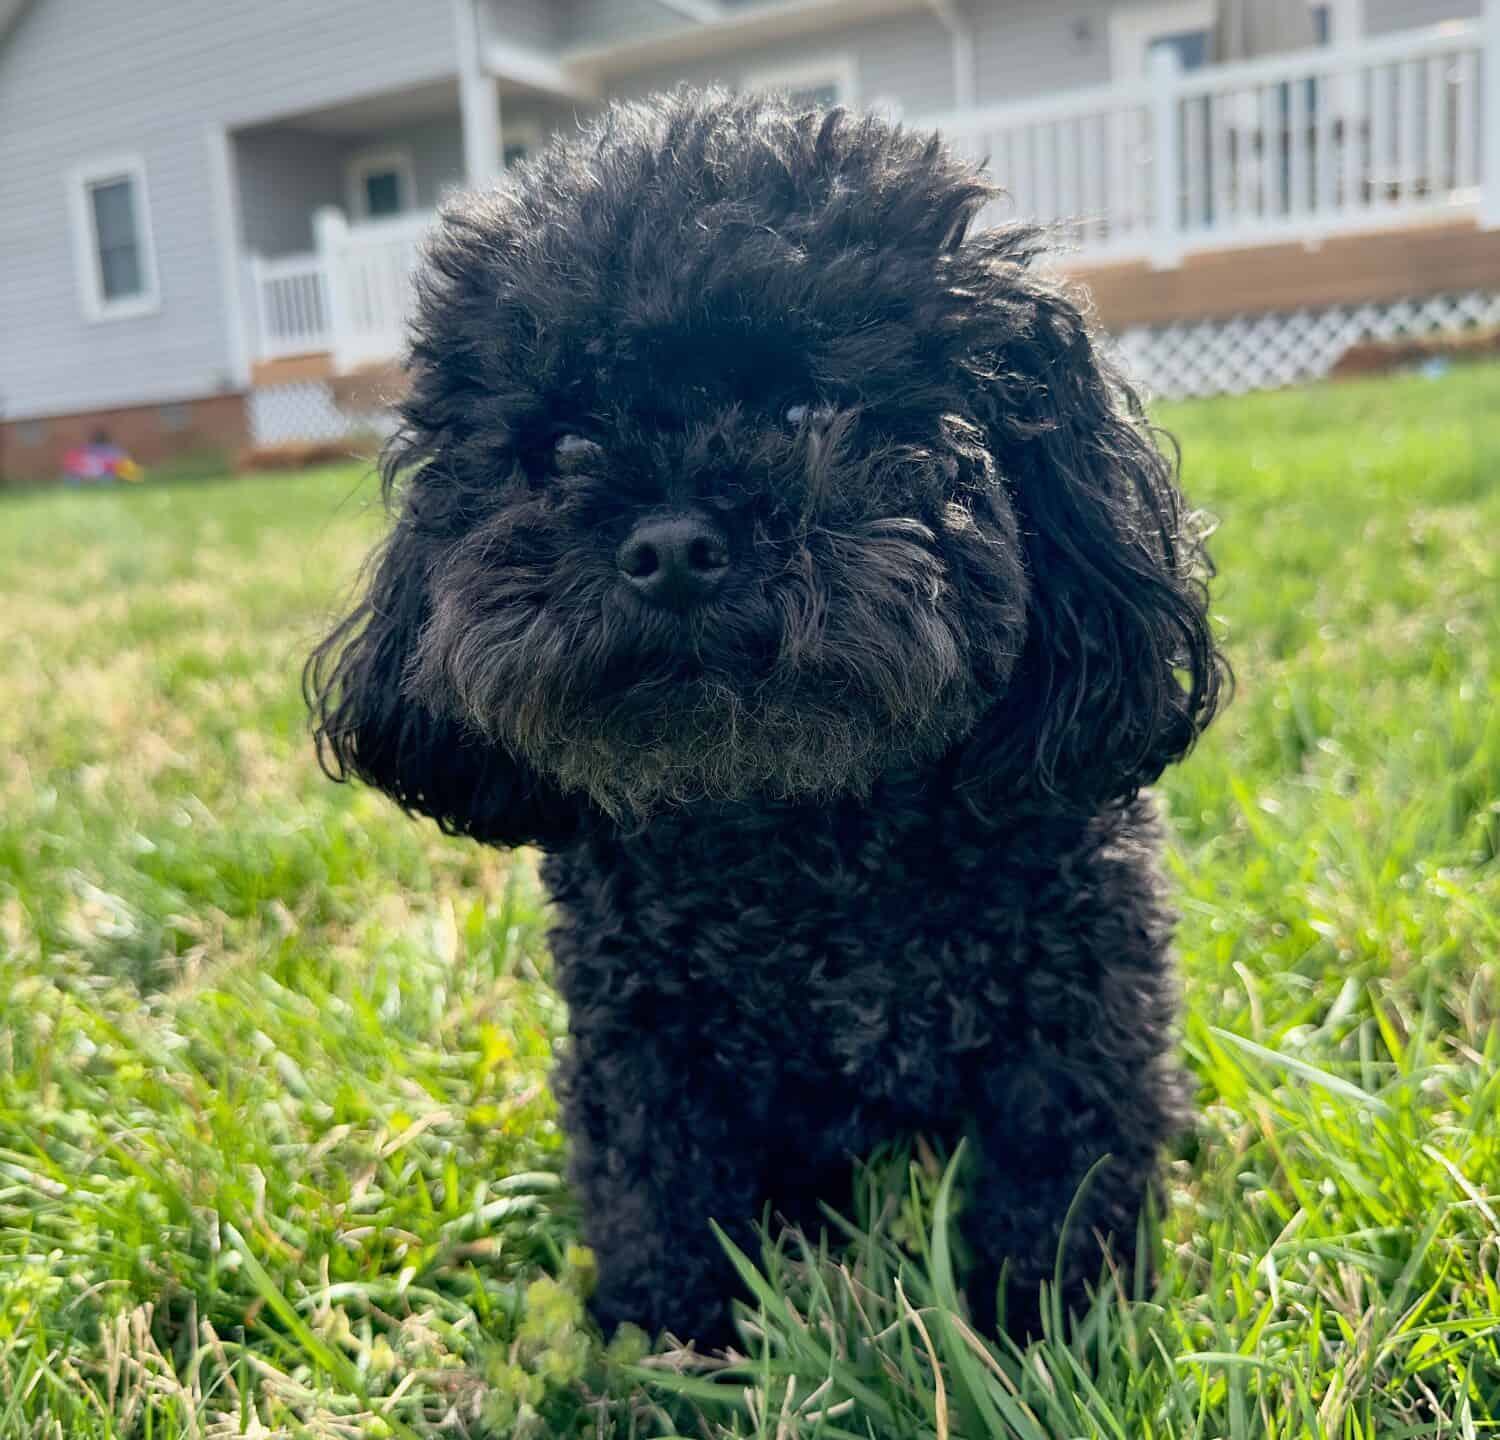 Cute little black maltipoo in grass